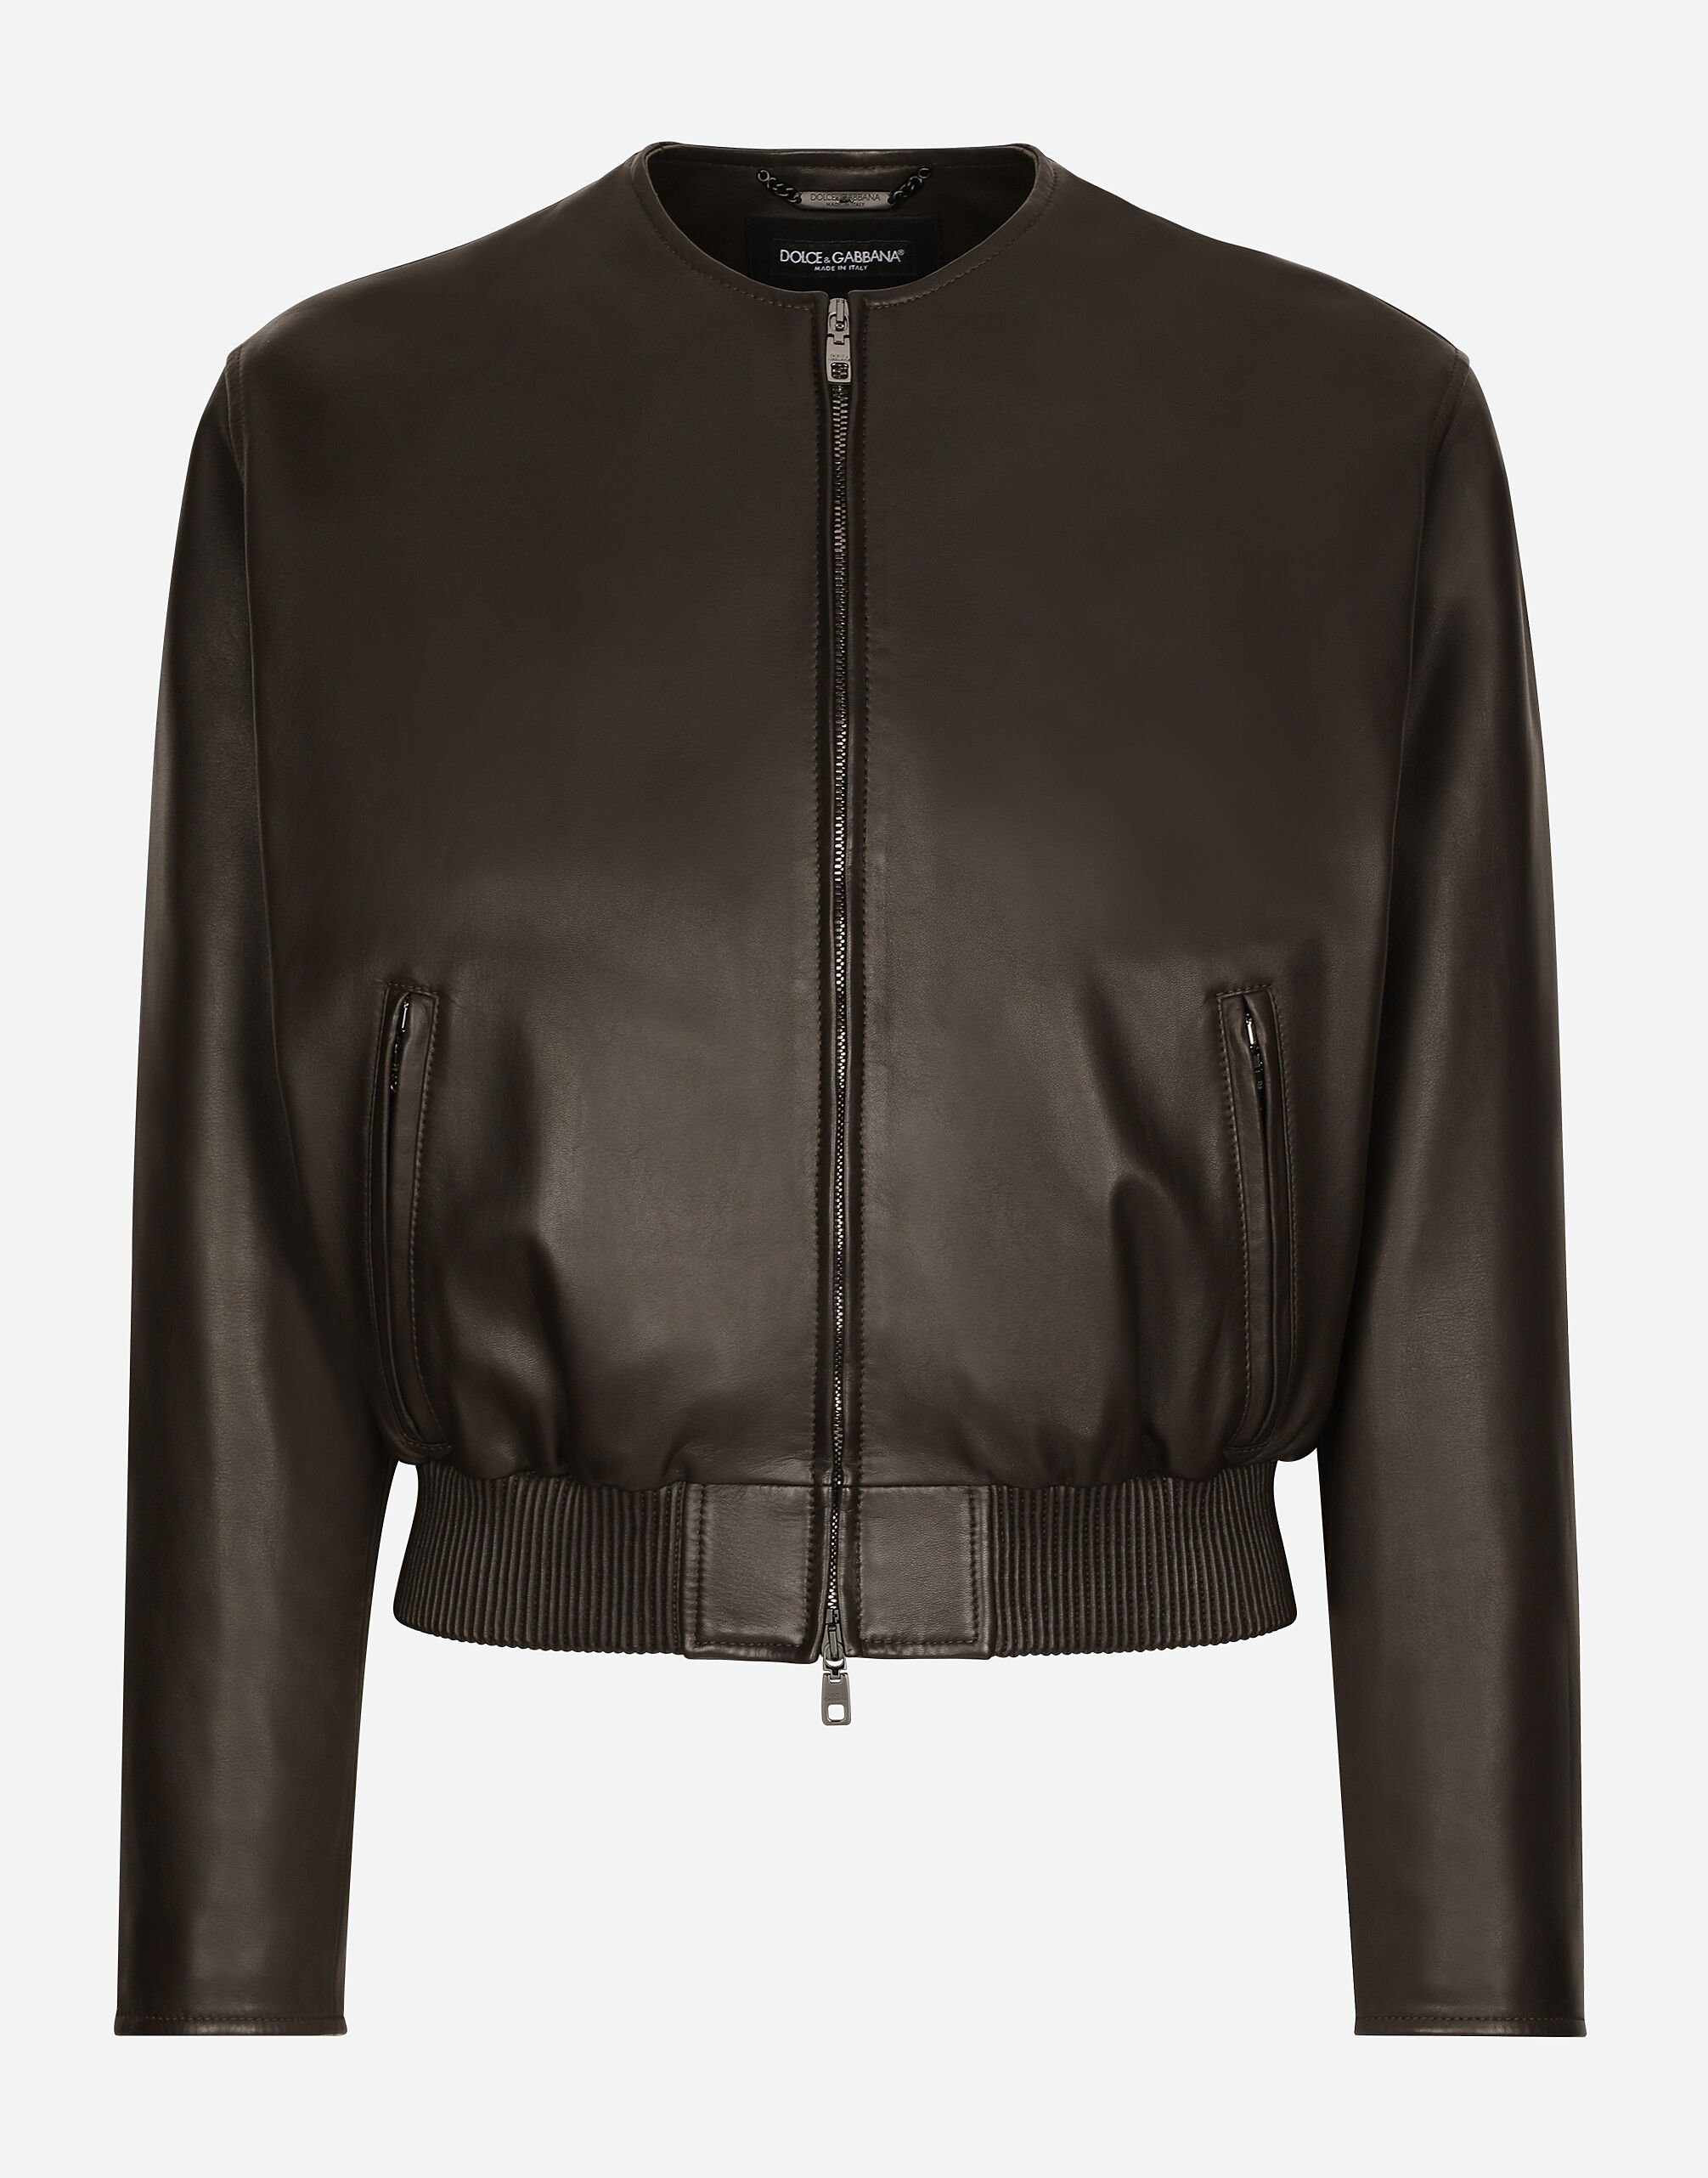 Dolce & Gabbana Leather bomber jacket Black GVR7HZG7I3I